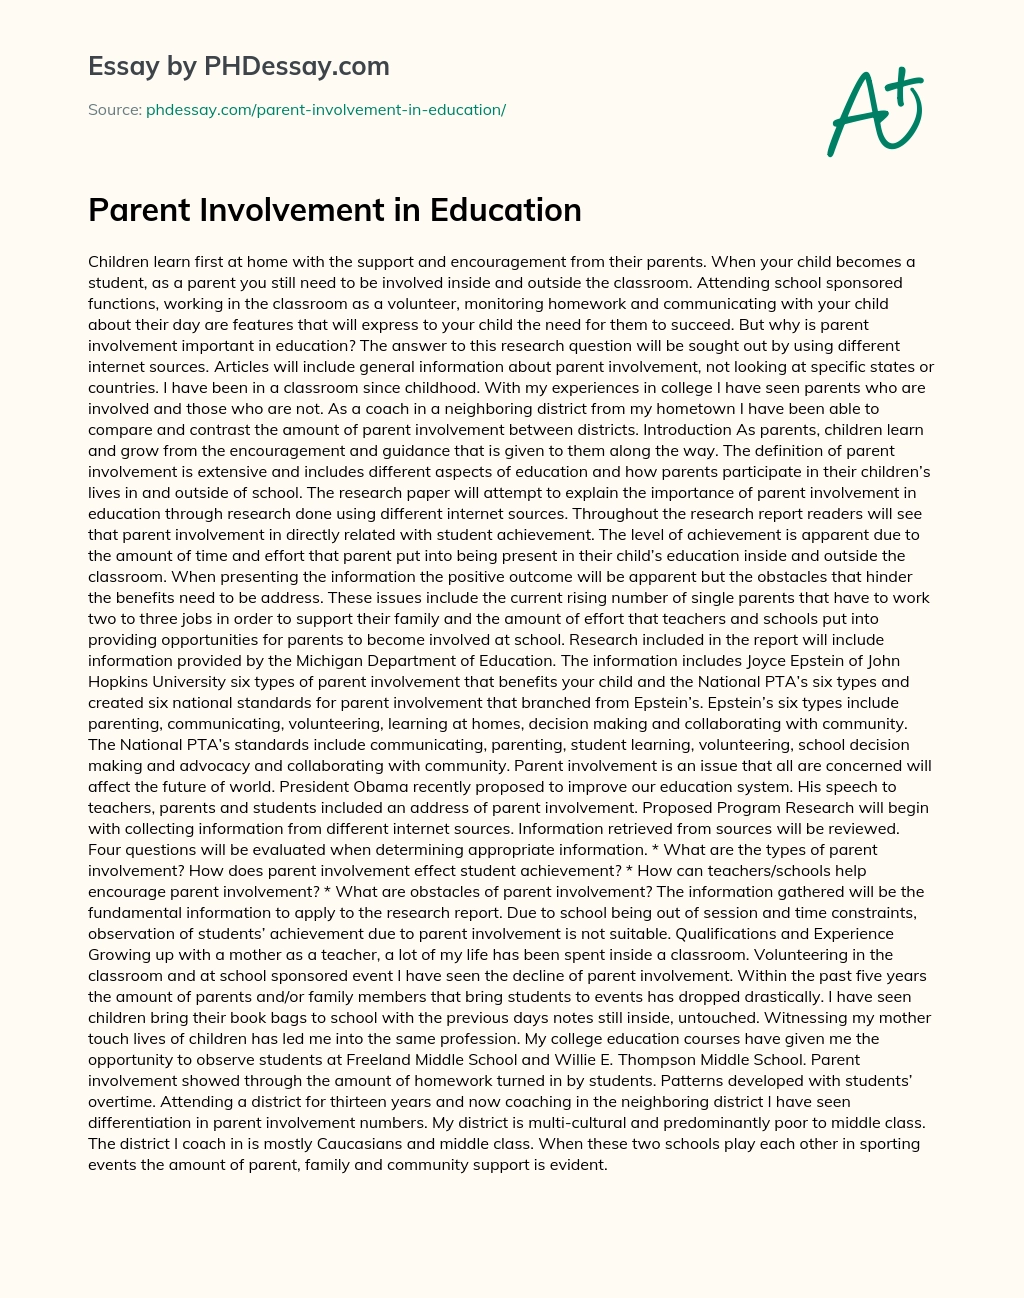 Parent Involvement in Education essay